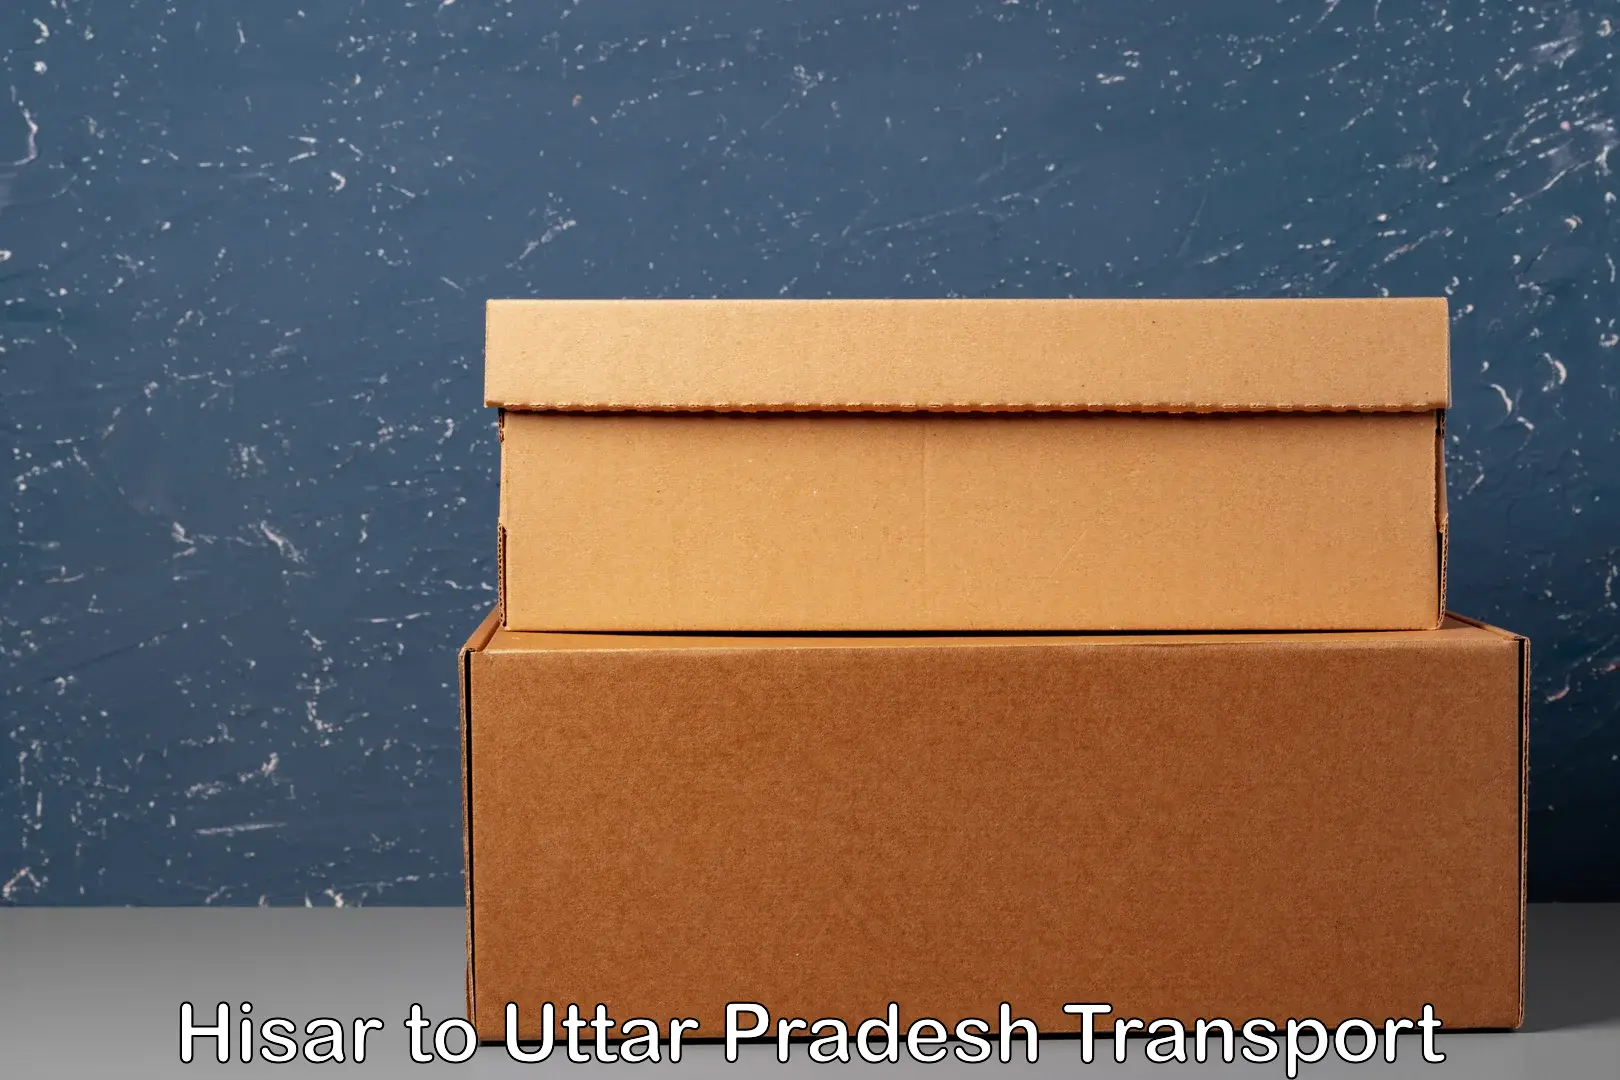 Delivery service Hisar to Uttar Pradesh